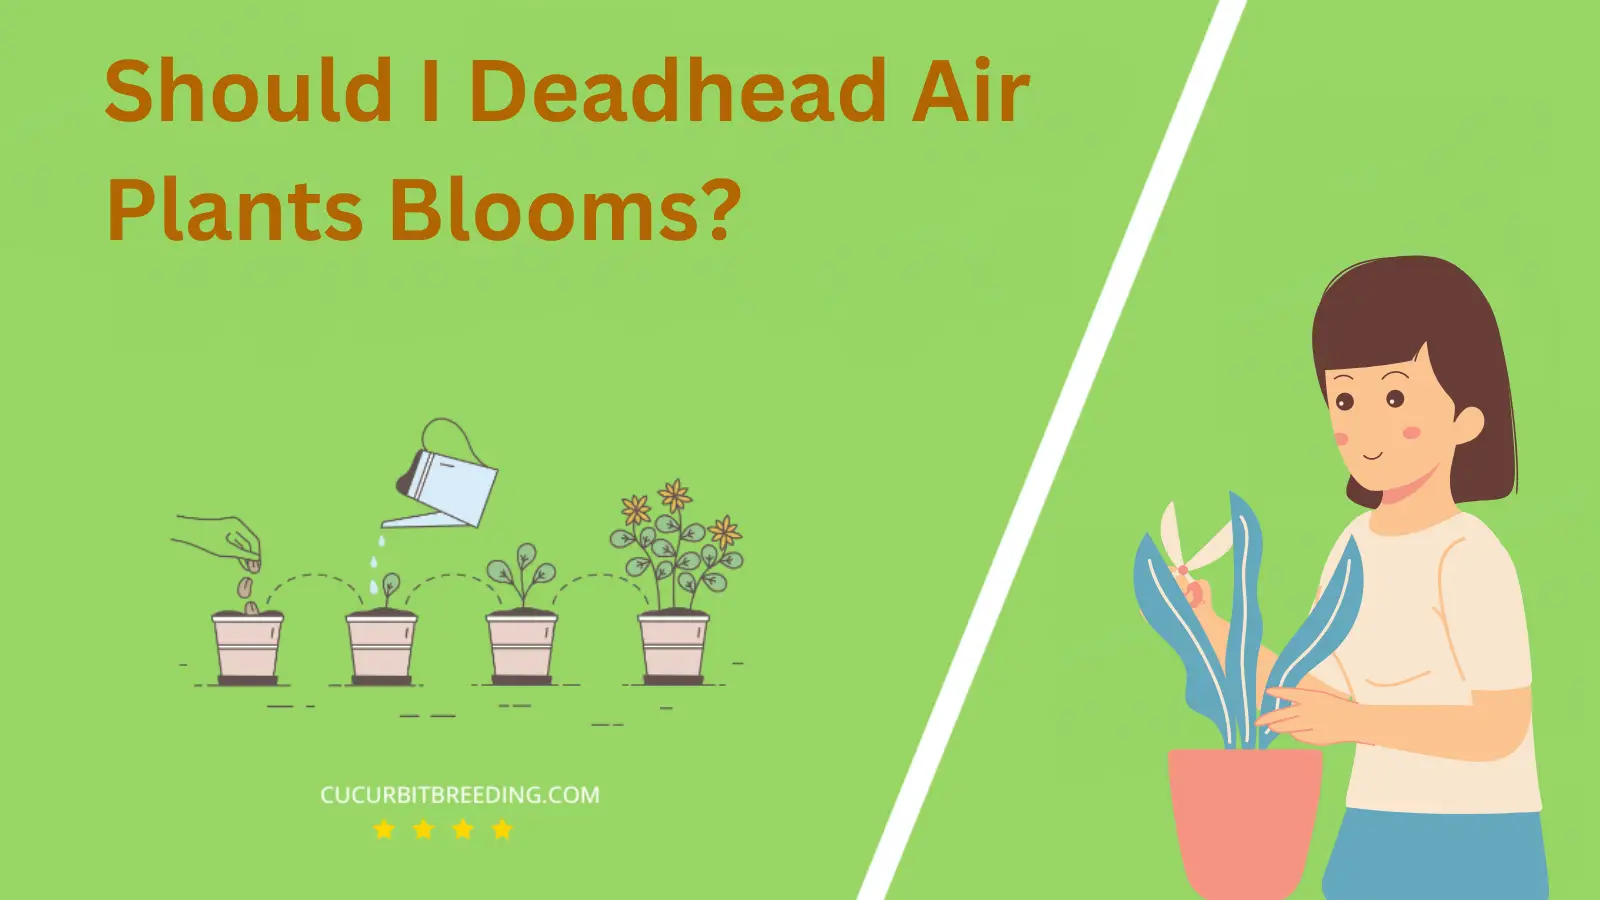 Should I Deadhead Air Plants Blooms?